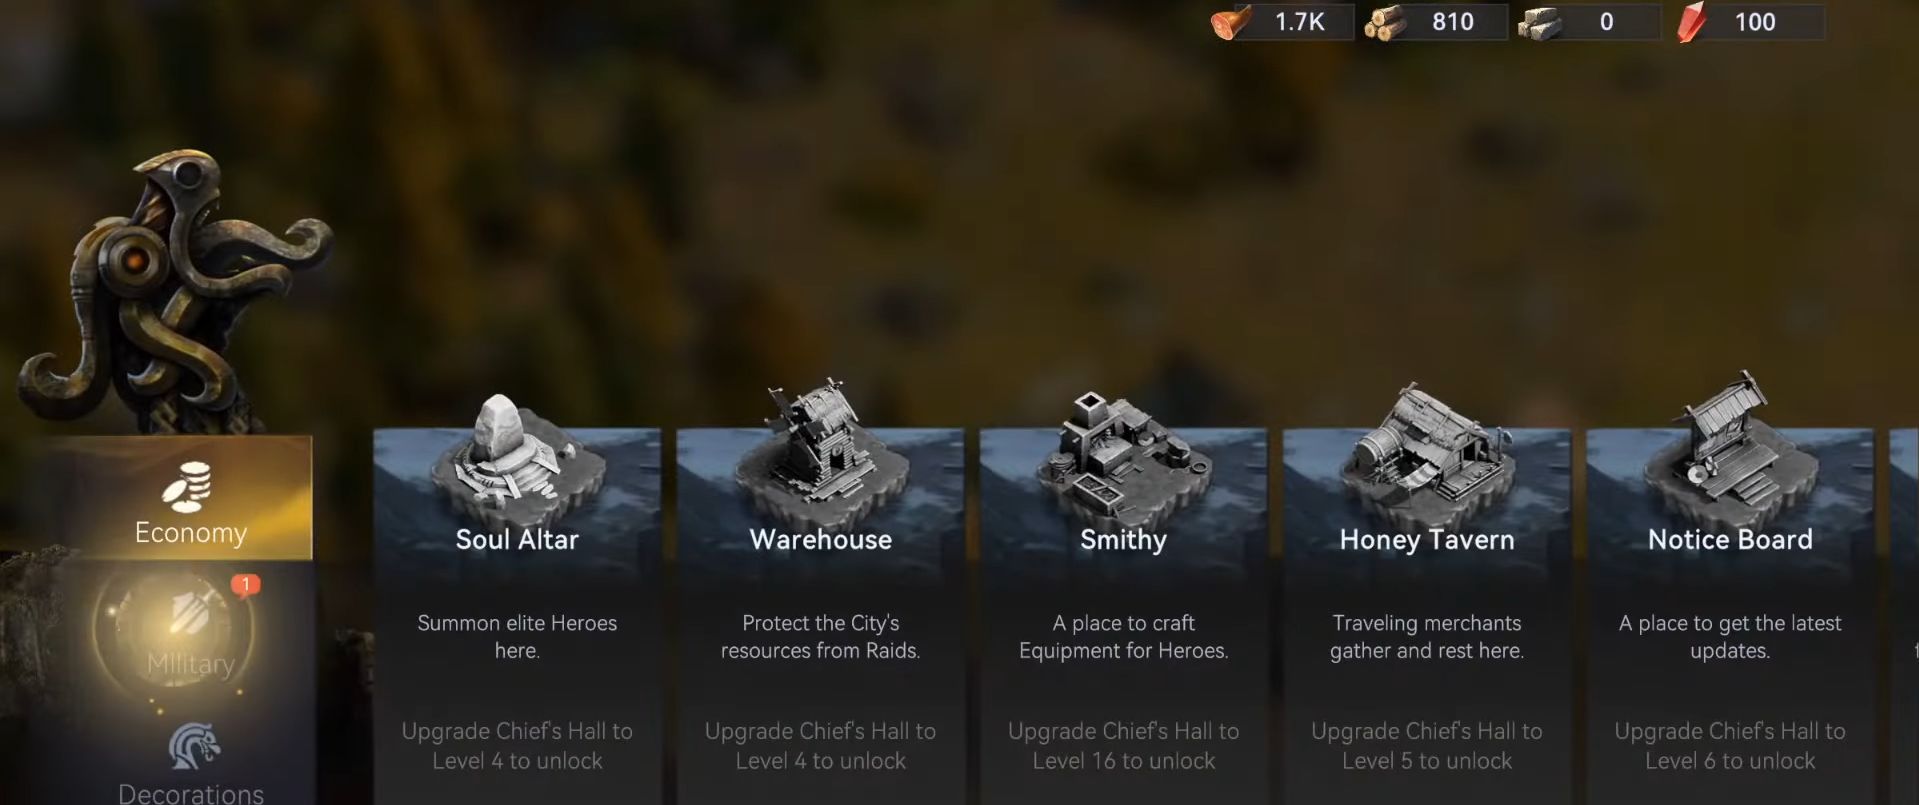 Viking Rise - Android game screenshots.